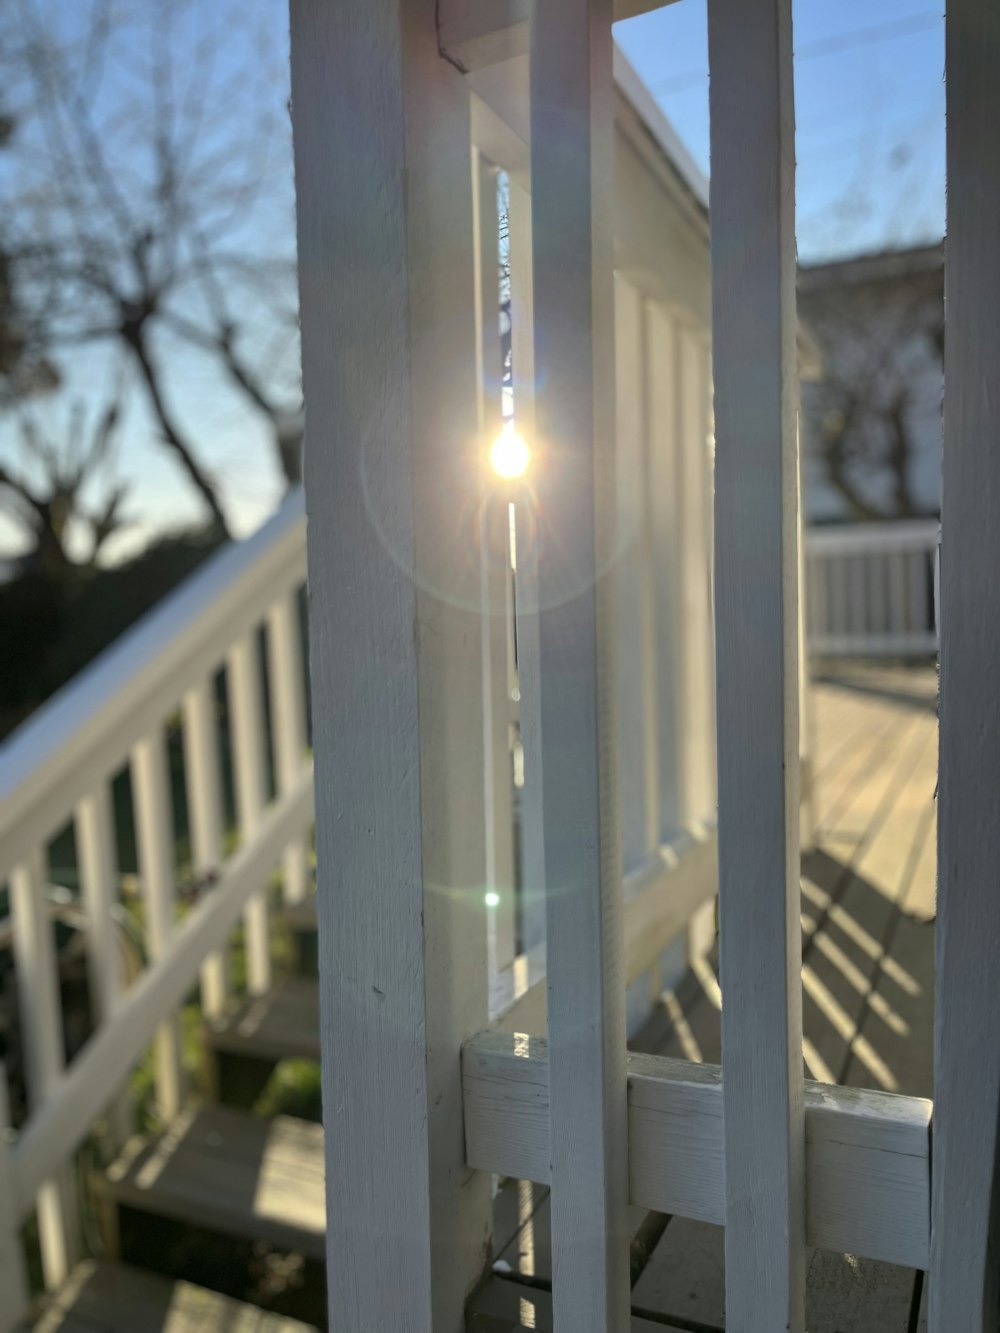 a close up of a light on a porch